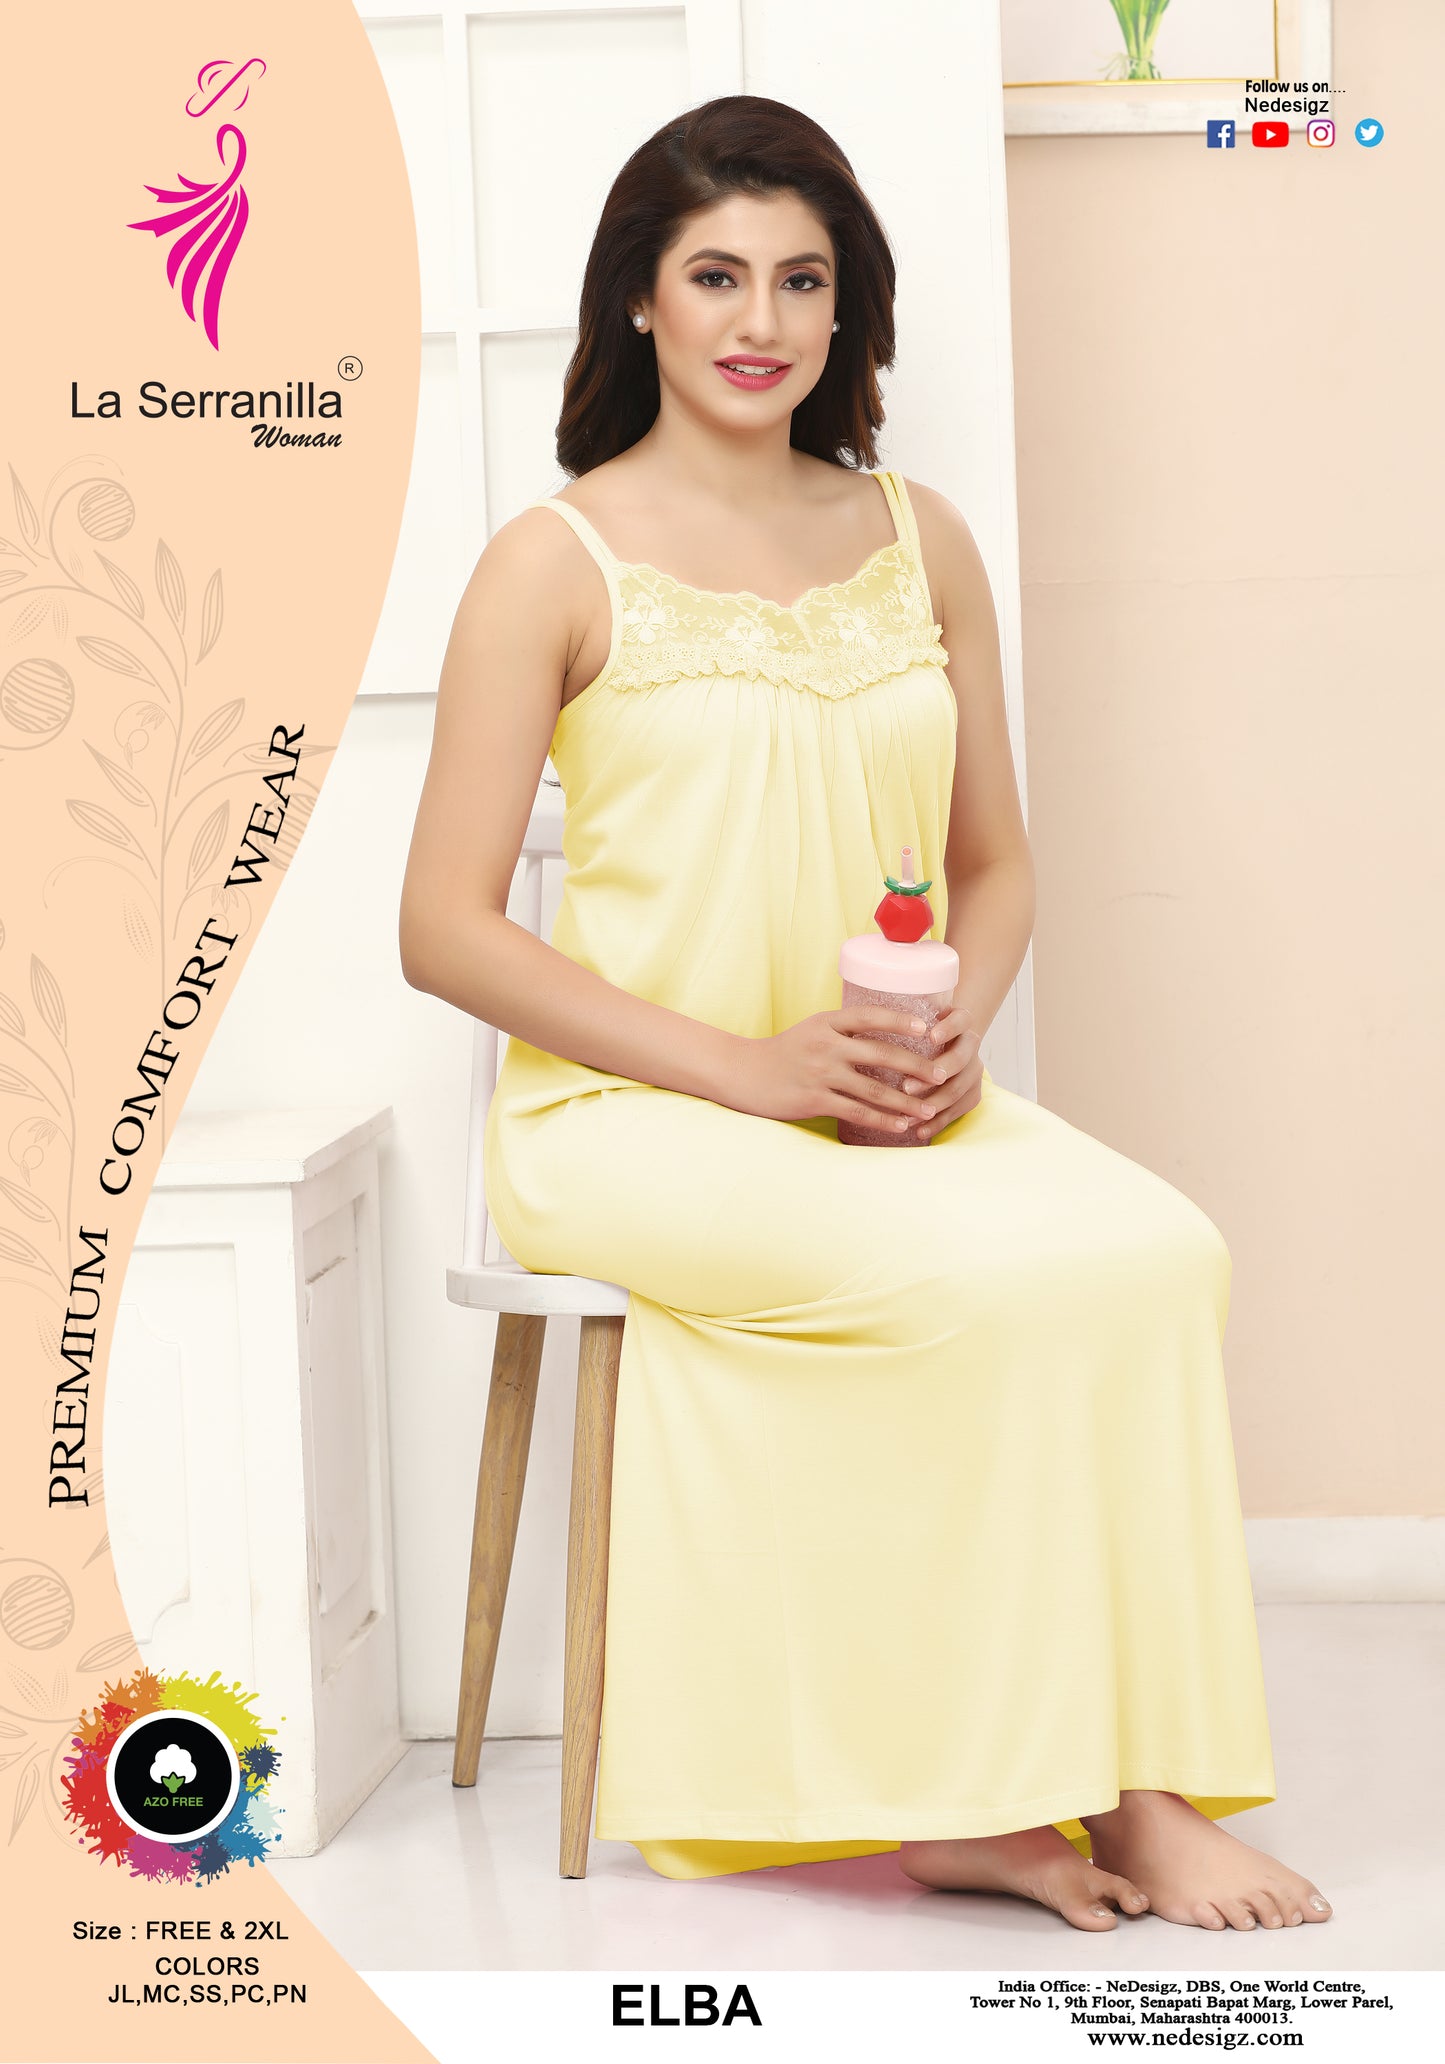 La Serranilla® Women's Azo-Free Cotton Hosiery Nighty/Gown/Maxi with Exquisite Custom-Made Lace Trim - Comfortable and Elegant Indoor/Honeymoon Nightwear. ELBA-NeDesigz.com